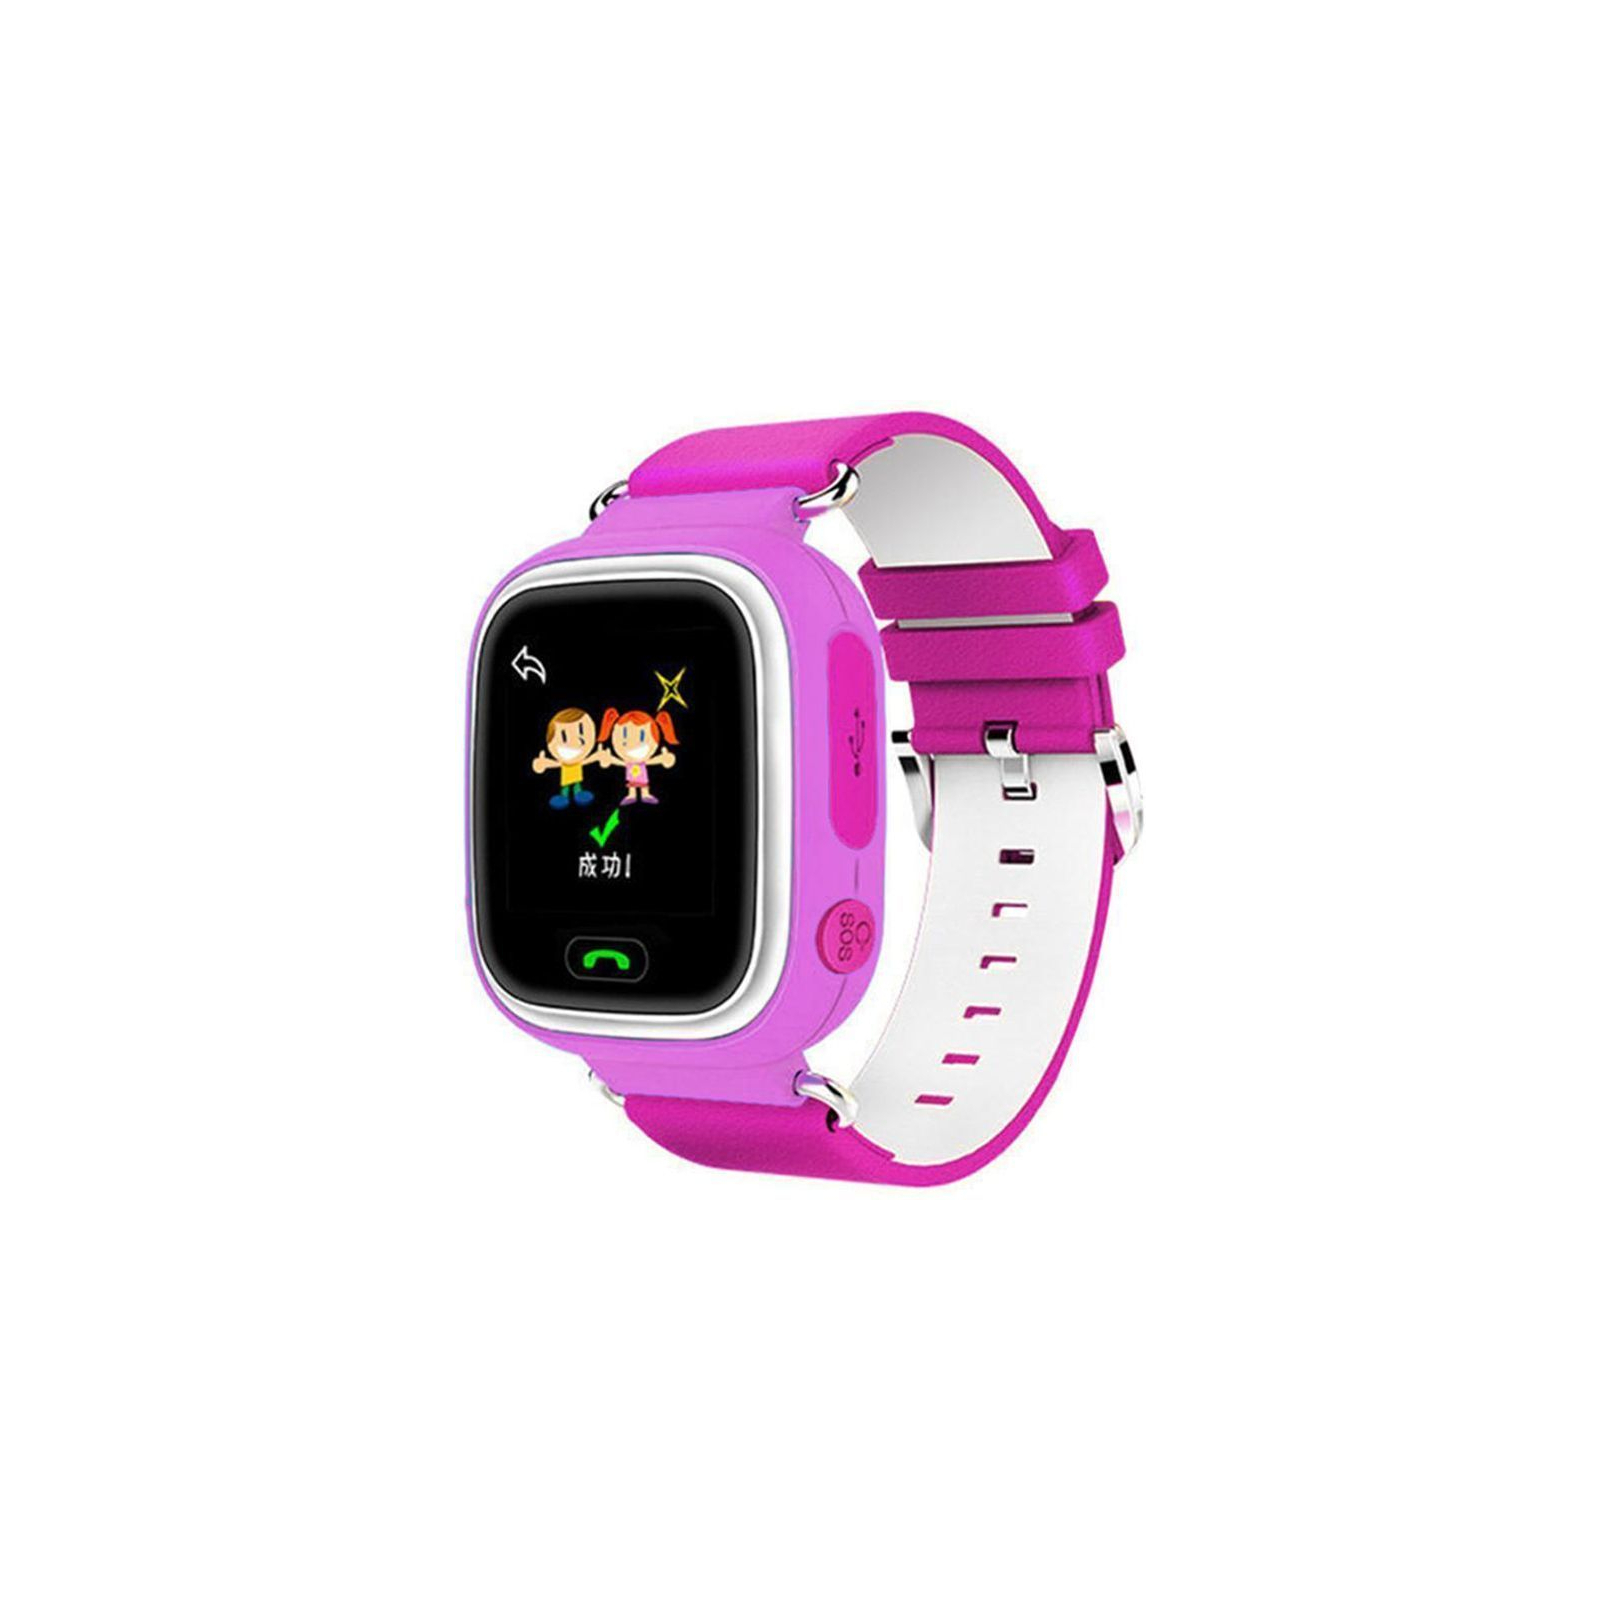 Смарт-часы UWatch Q90 Kid smart watch Black (F_50521) изображение 2